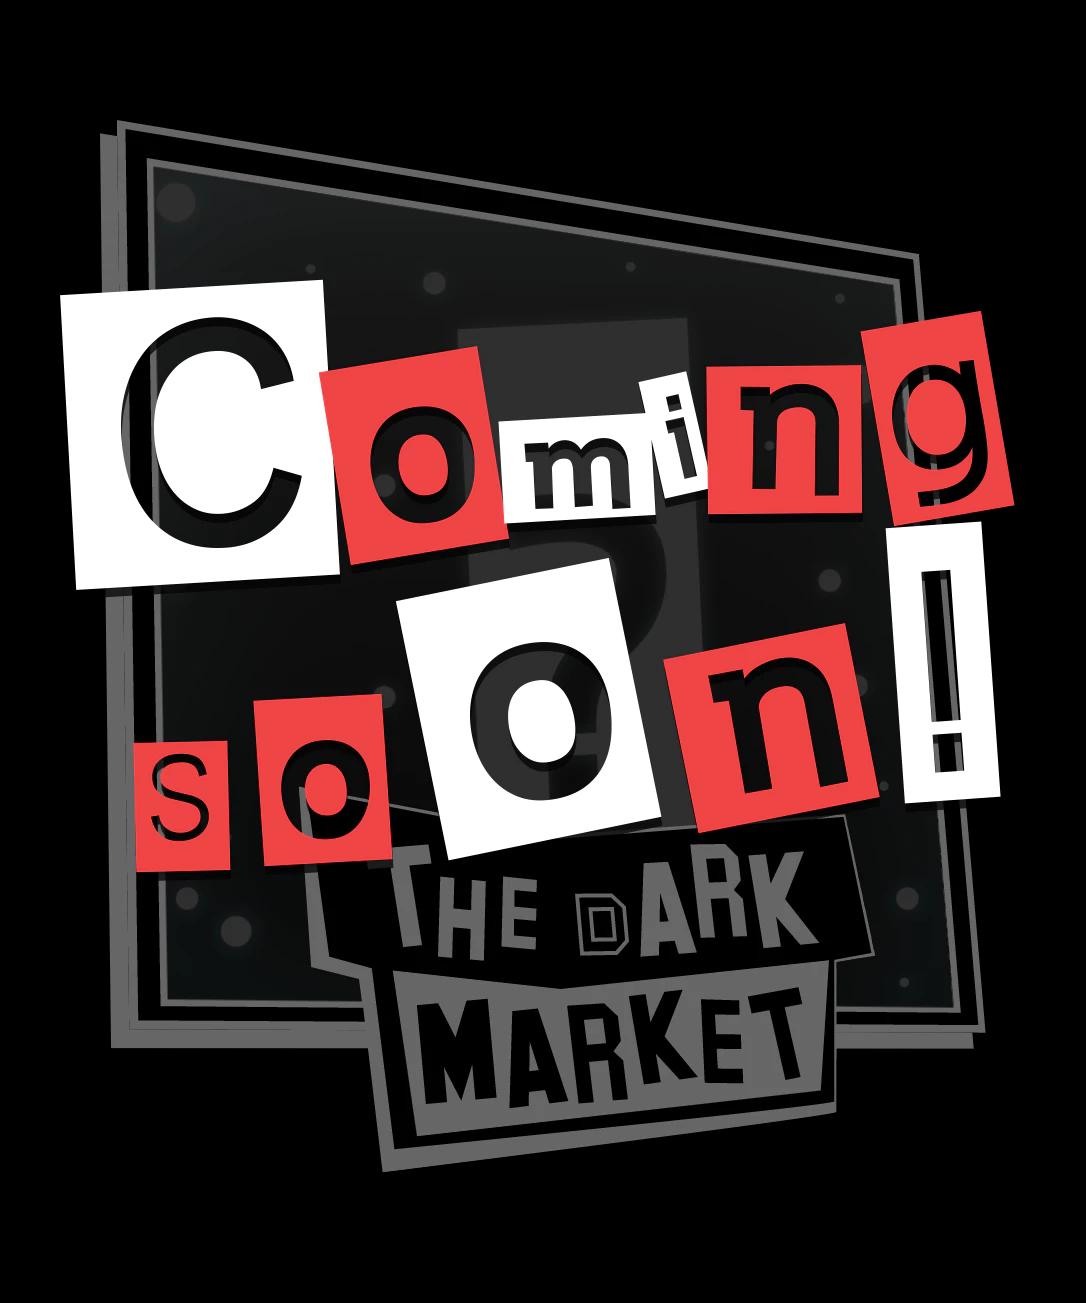 Coming Soon: The Dark Market